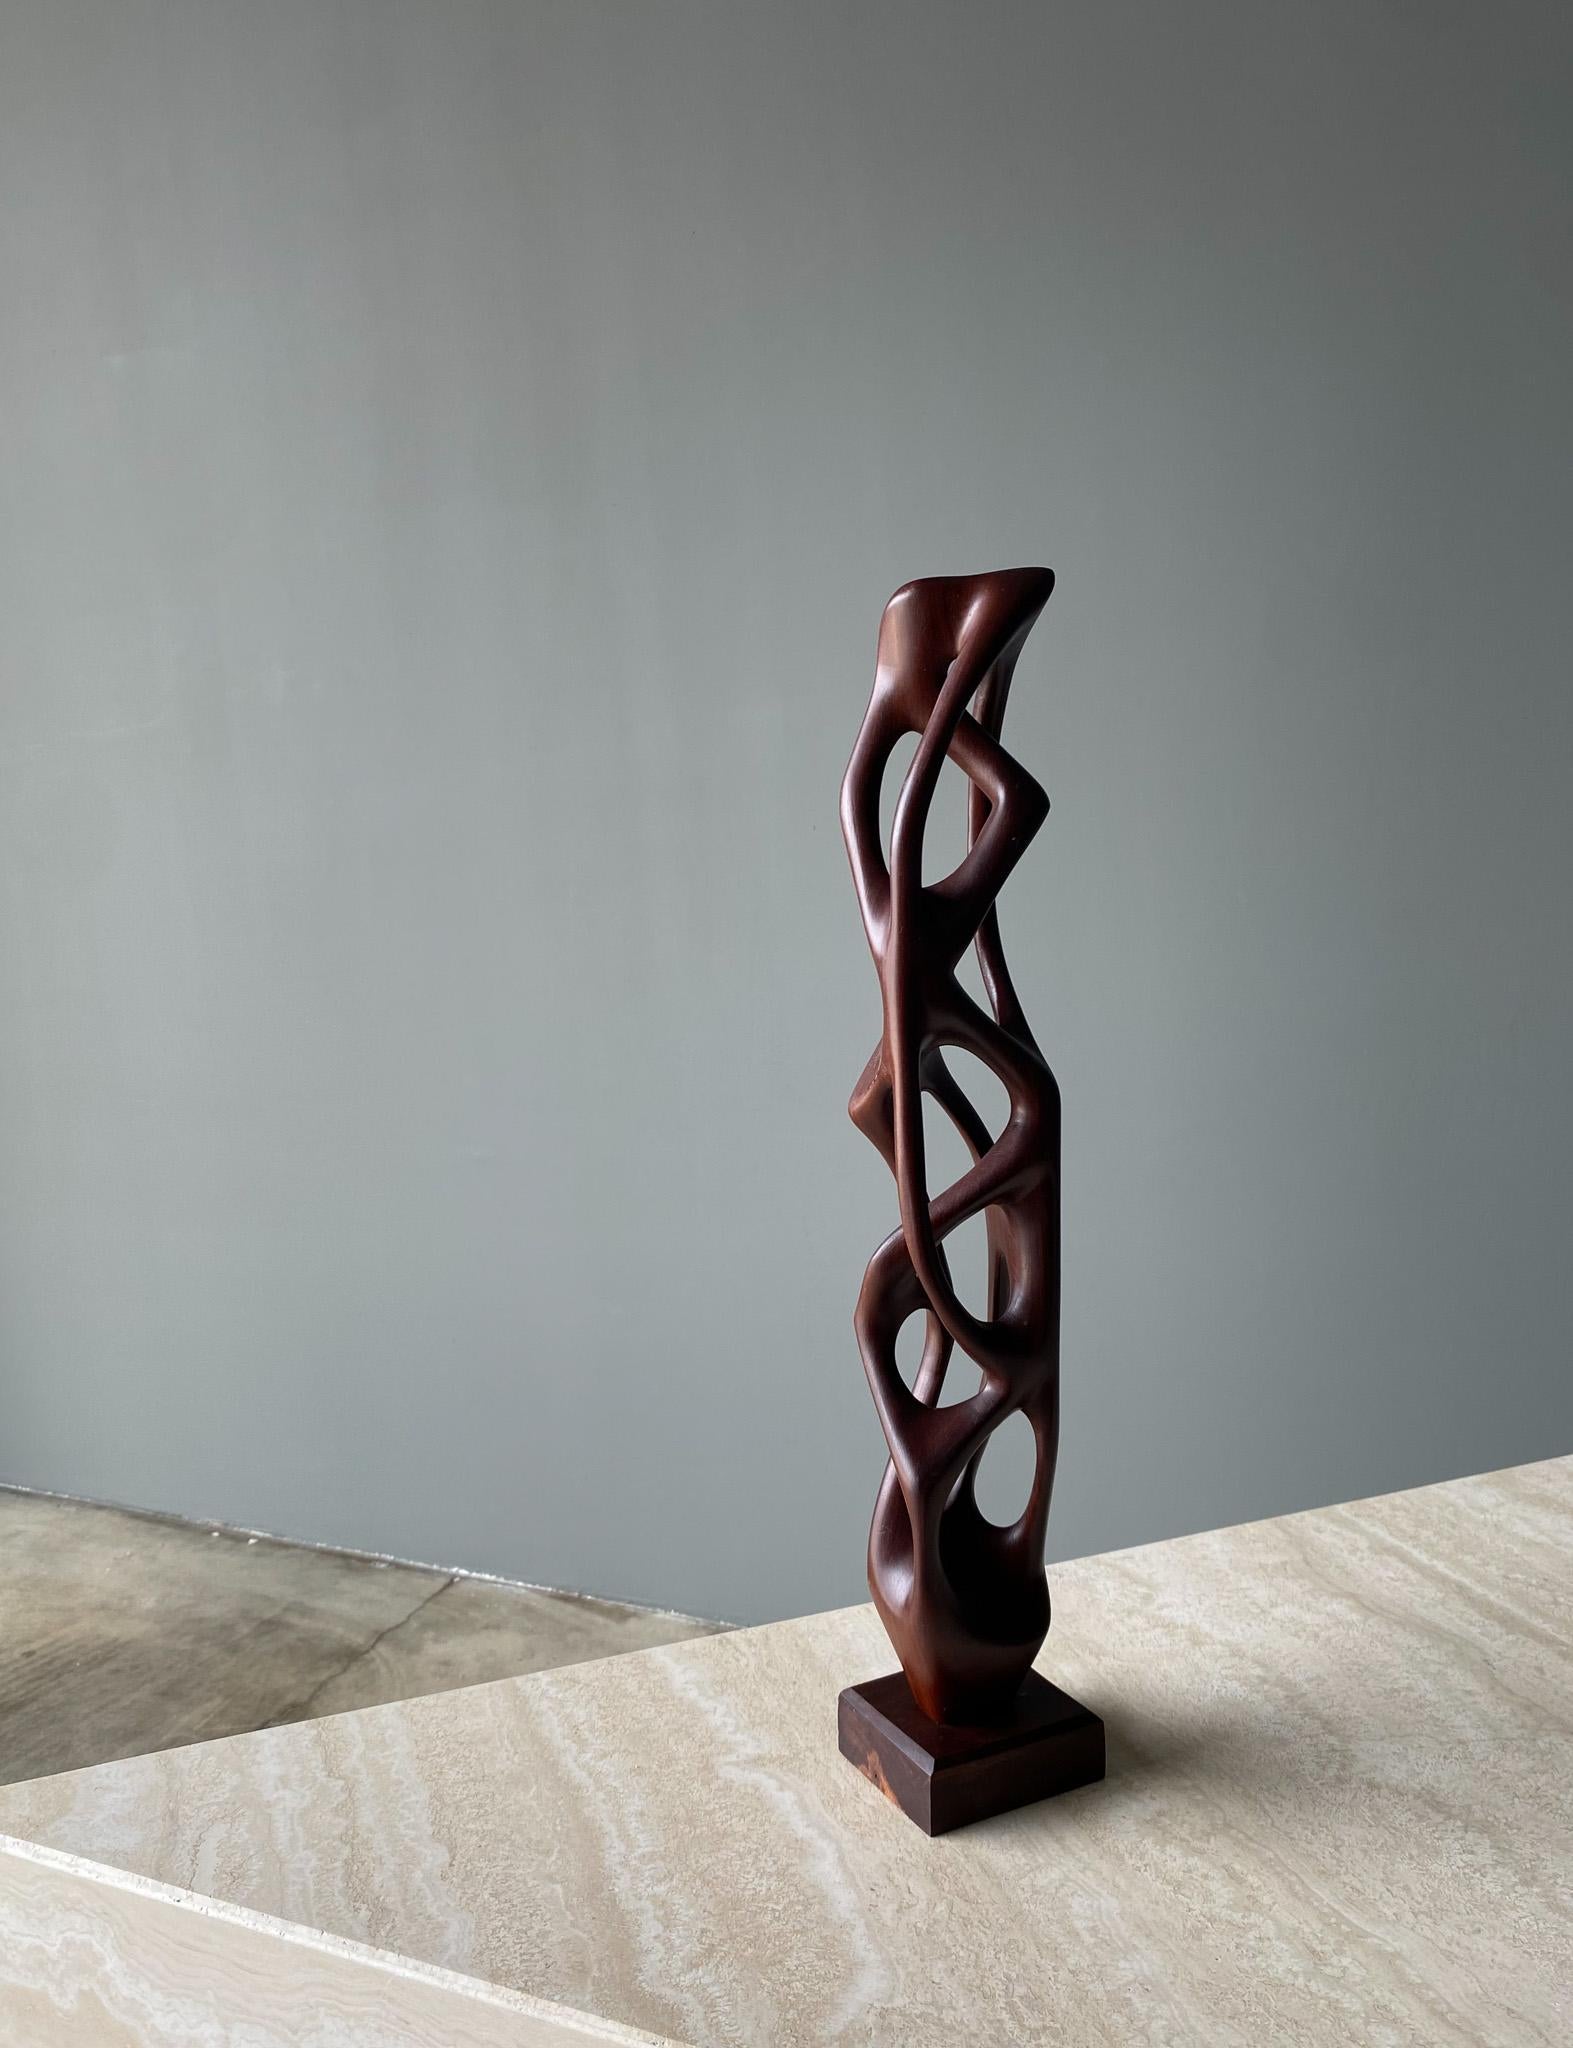 biomorphic wood sculpture